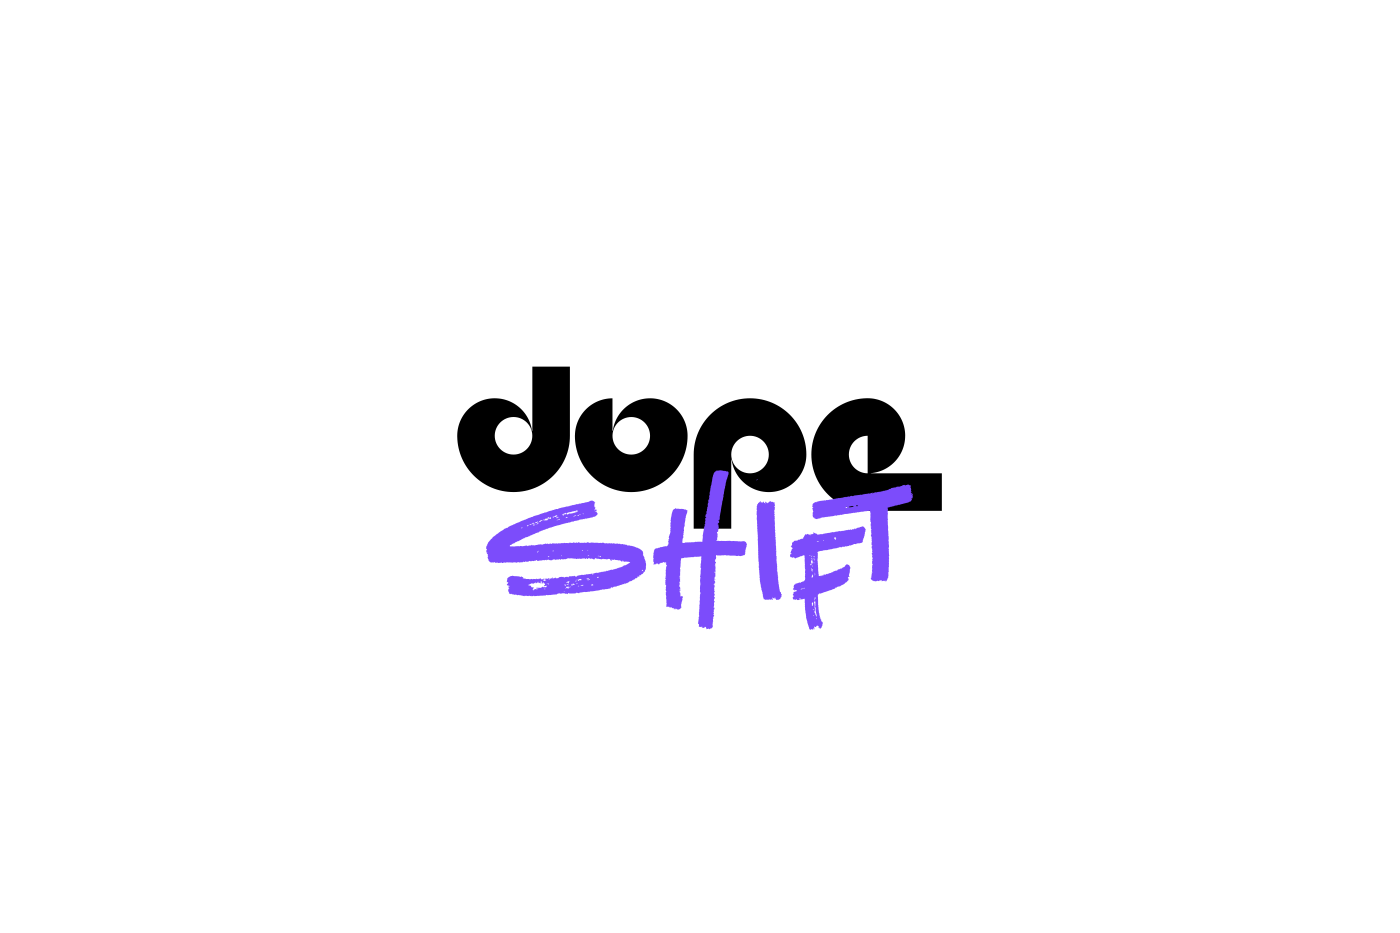 Dope Shift